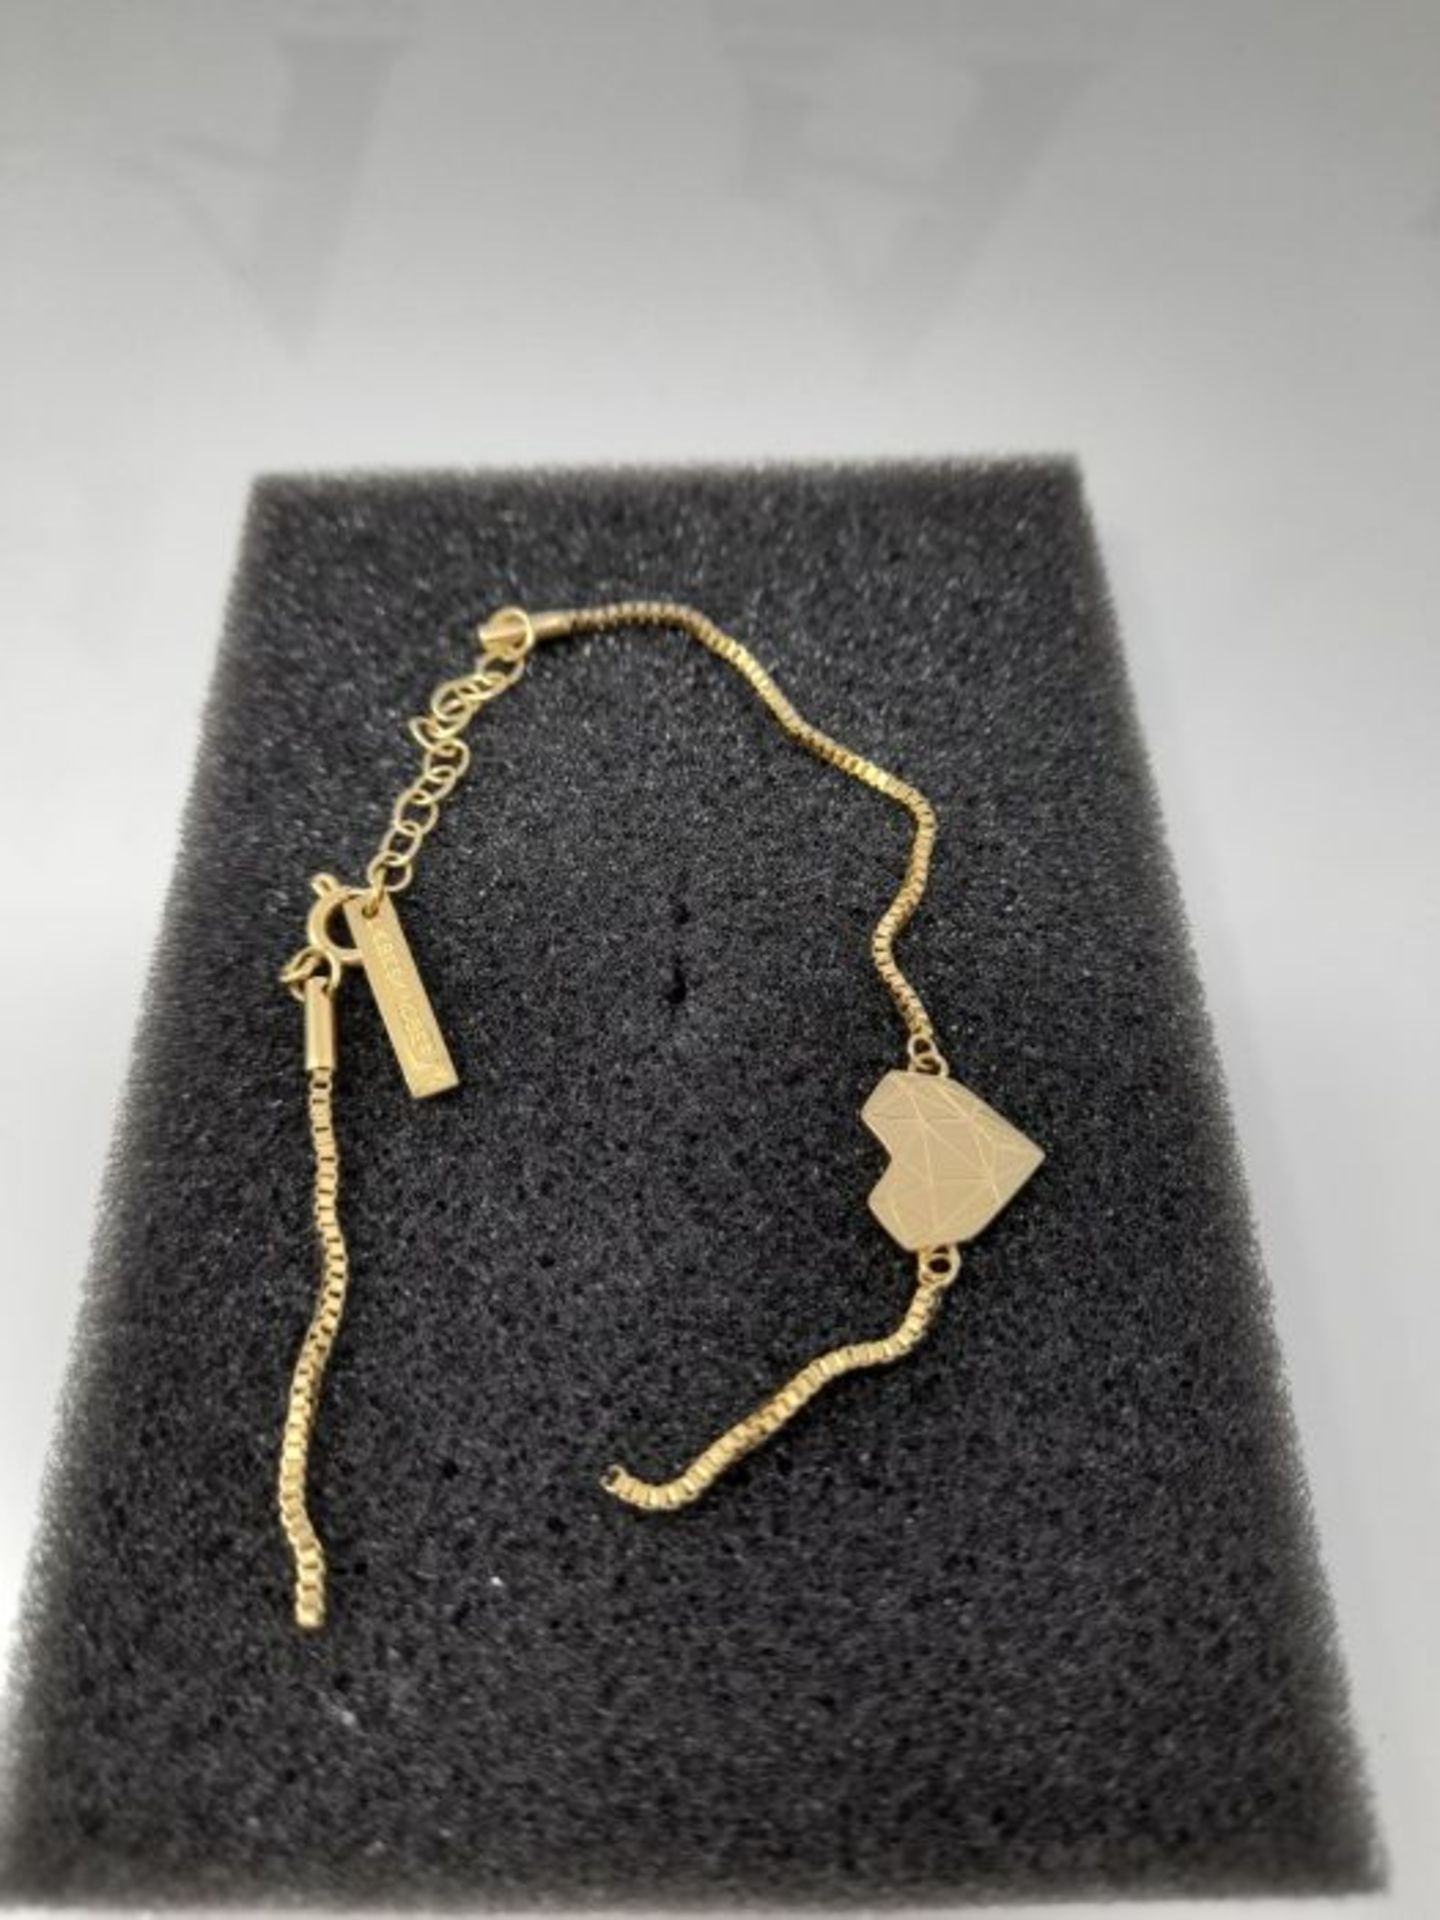 [CRACKED] Liebeskind Berlin Damen Armband Herz Edelstahl Silber 20 cm (gold) - Image 3 of 3